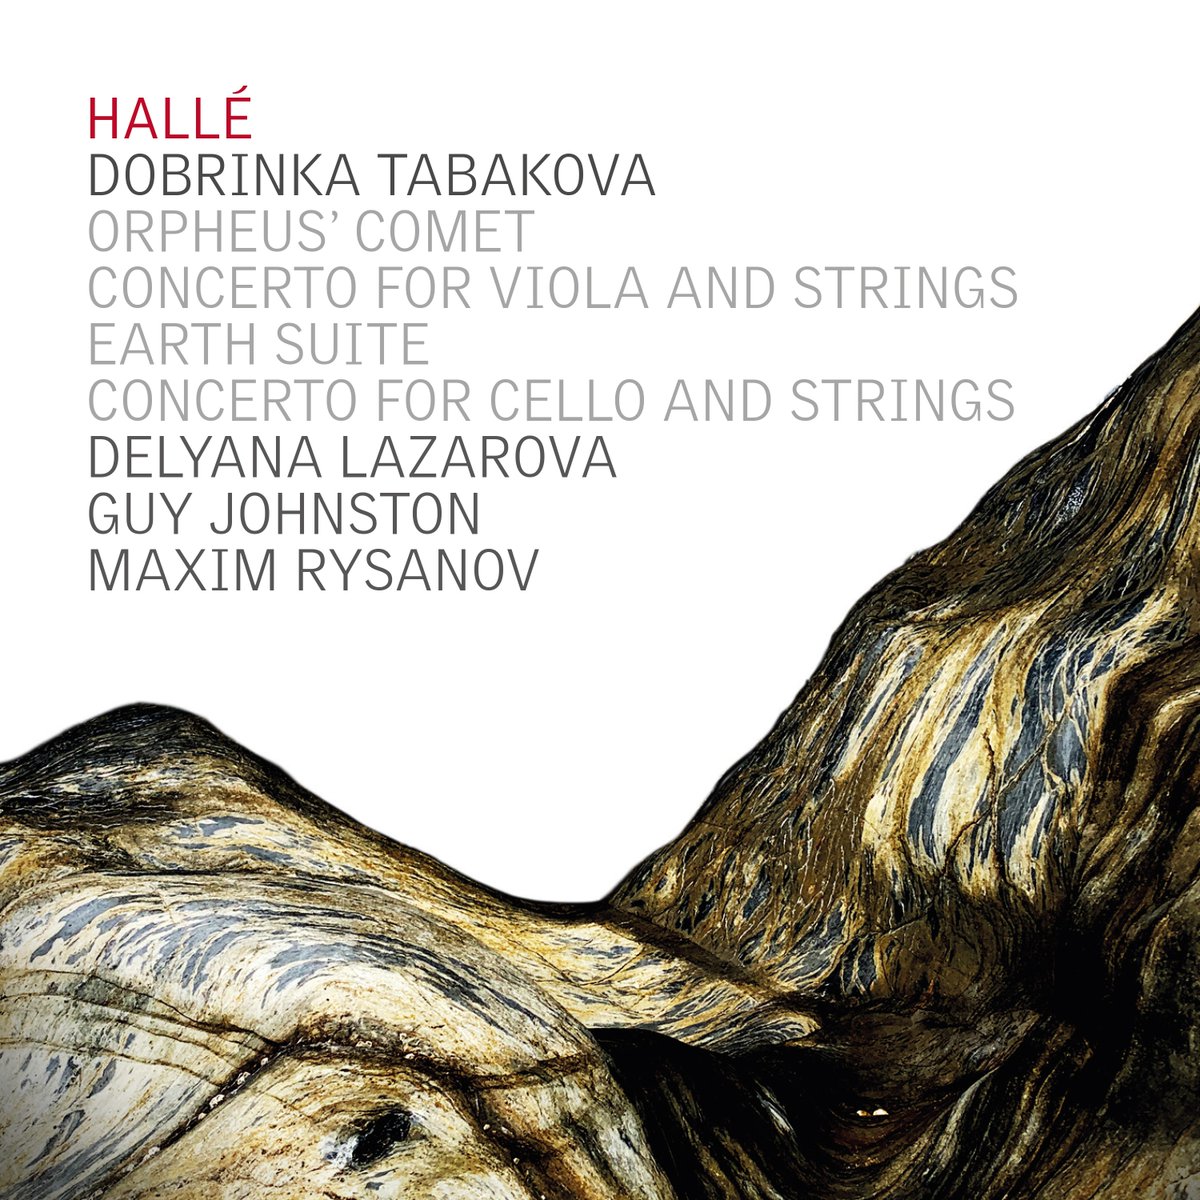 New Tabakova album out 6 October '23 @the_halle @LazarovaDelyana @MaximRysanov @cellojohnston @schottmusic